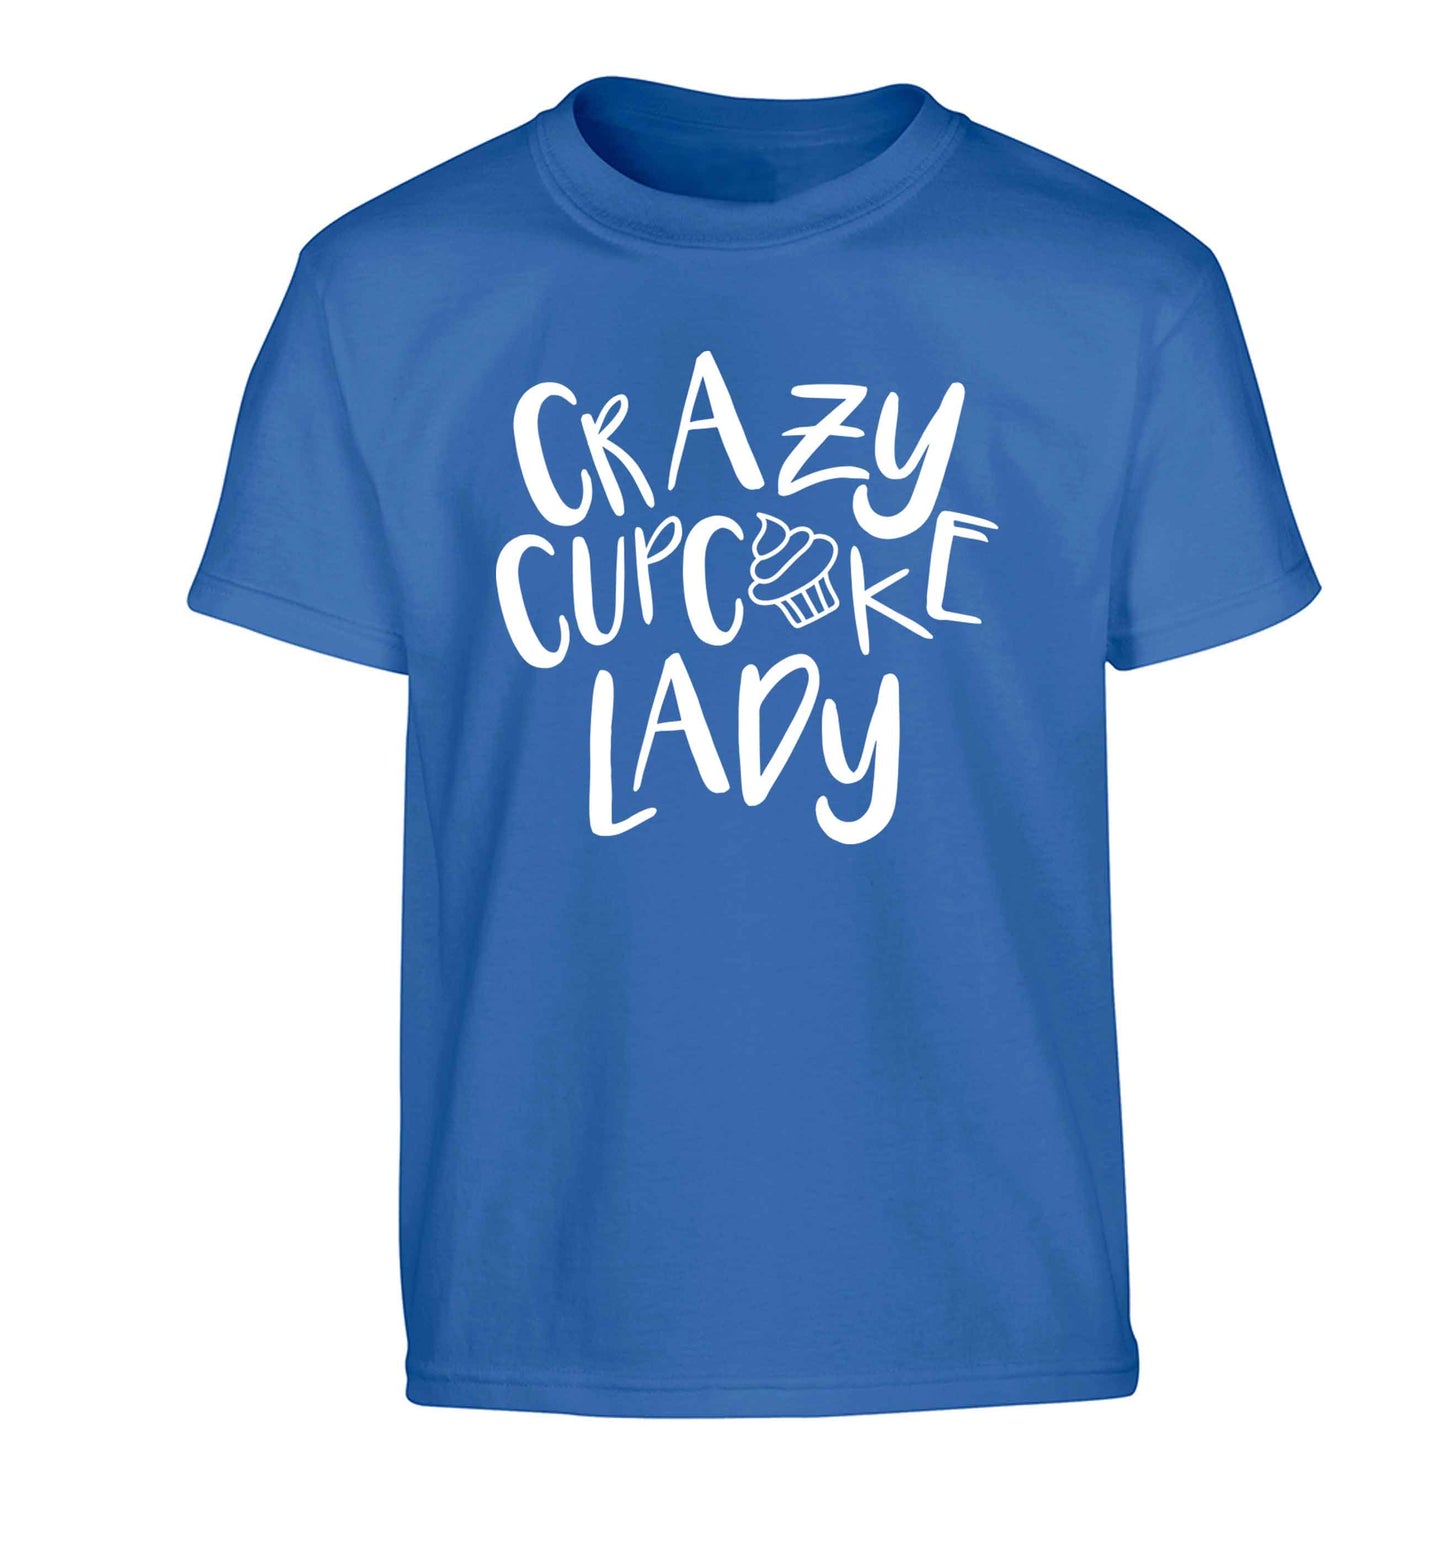 Crazy cupcake lady Children's blue Tshirt 12-13 Years